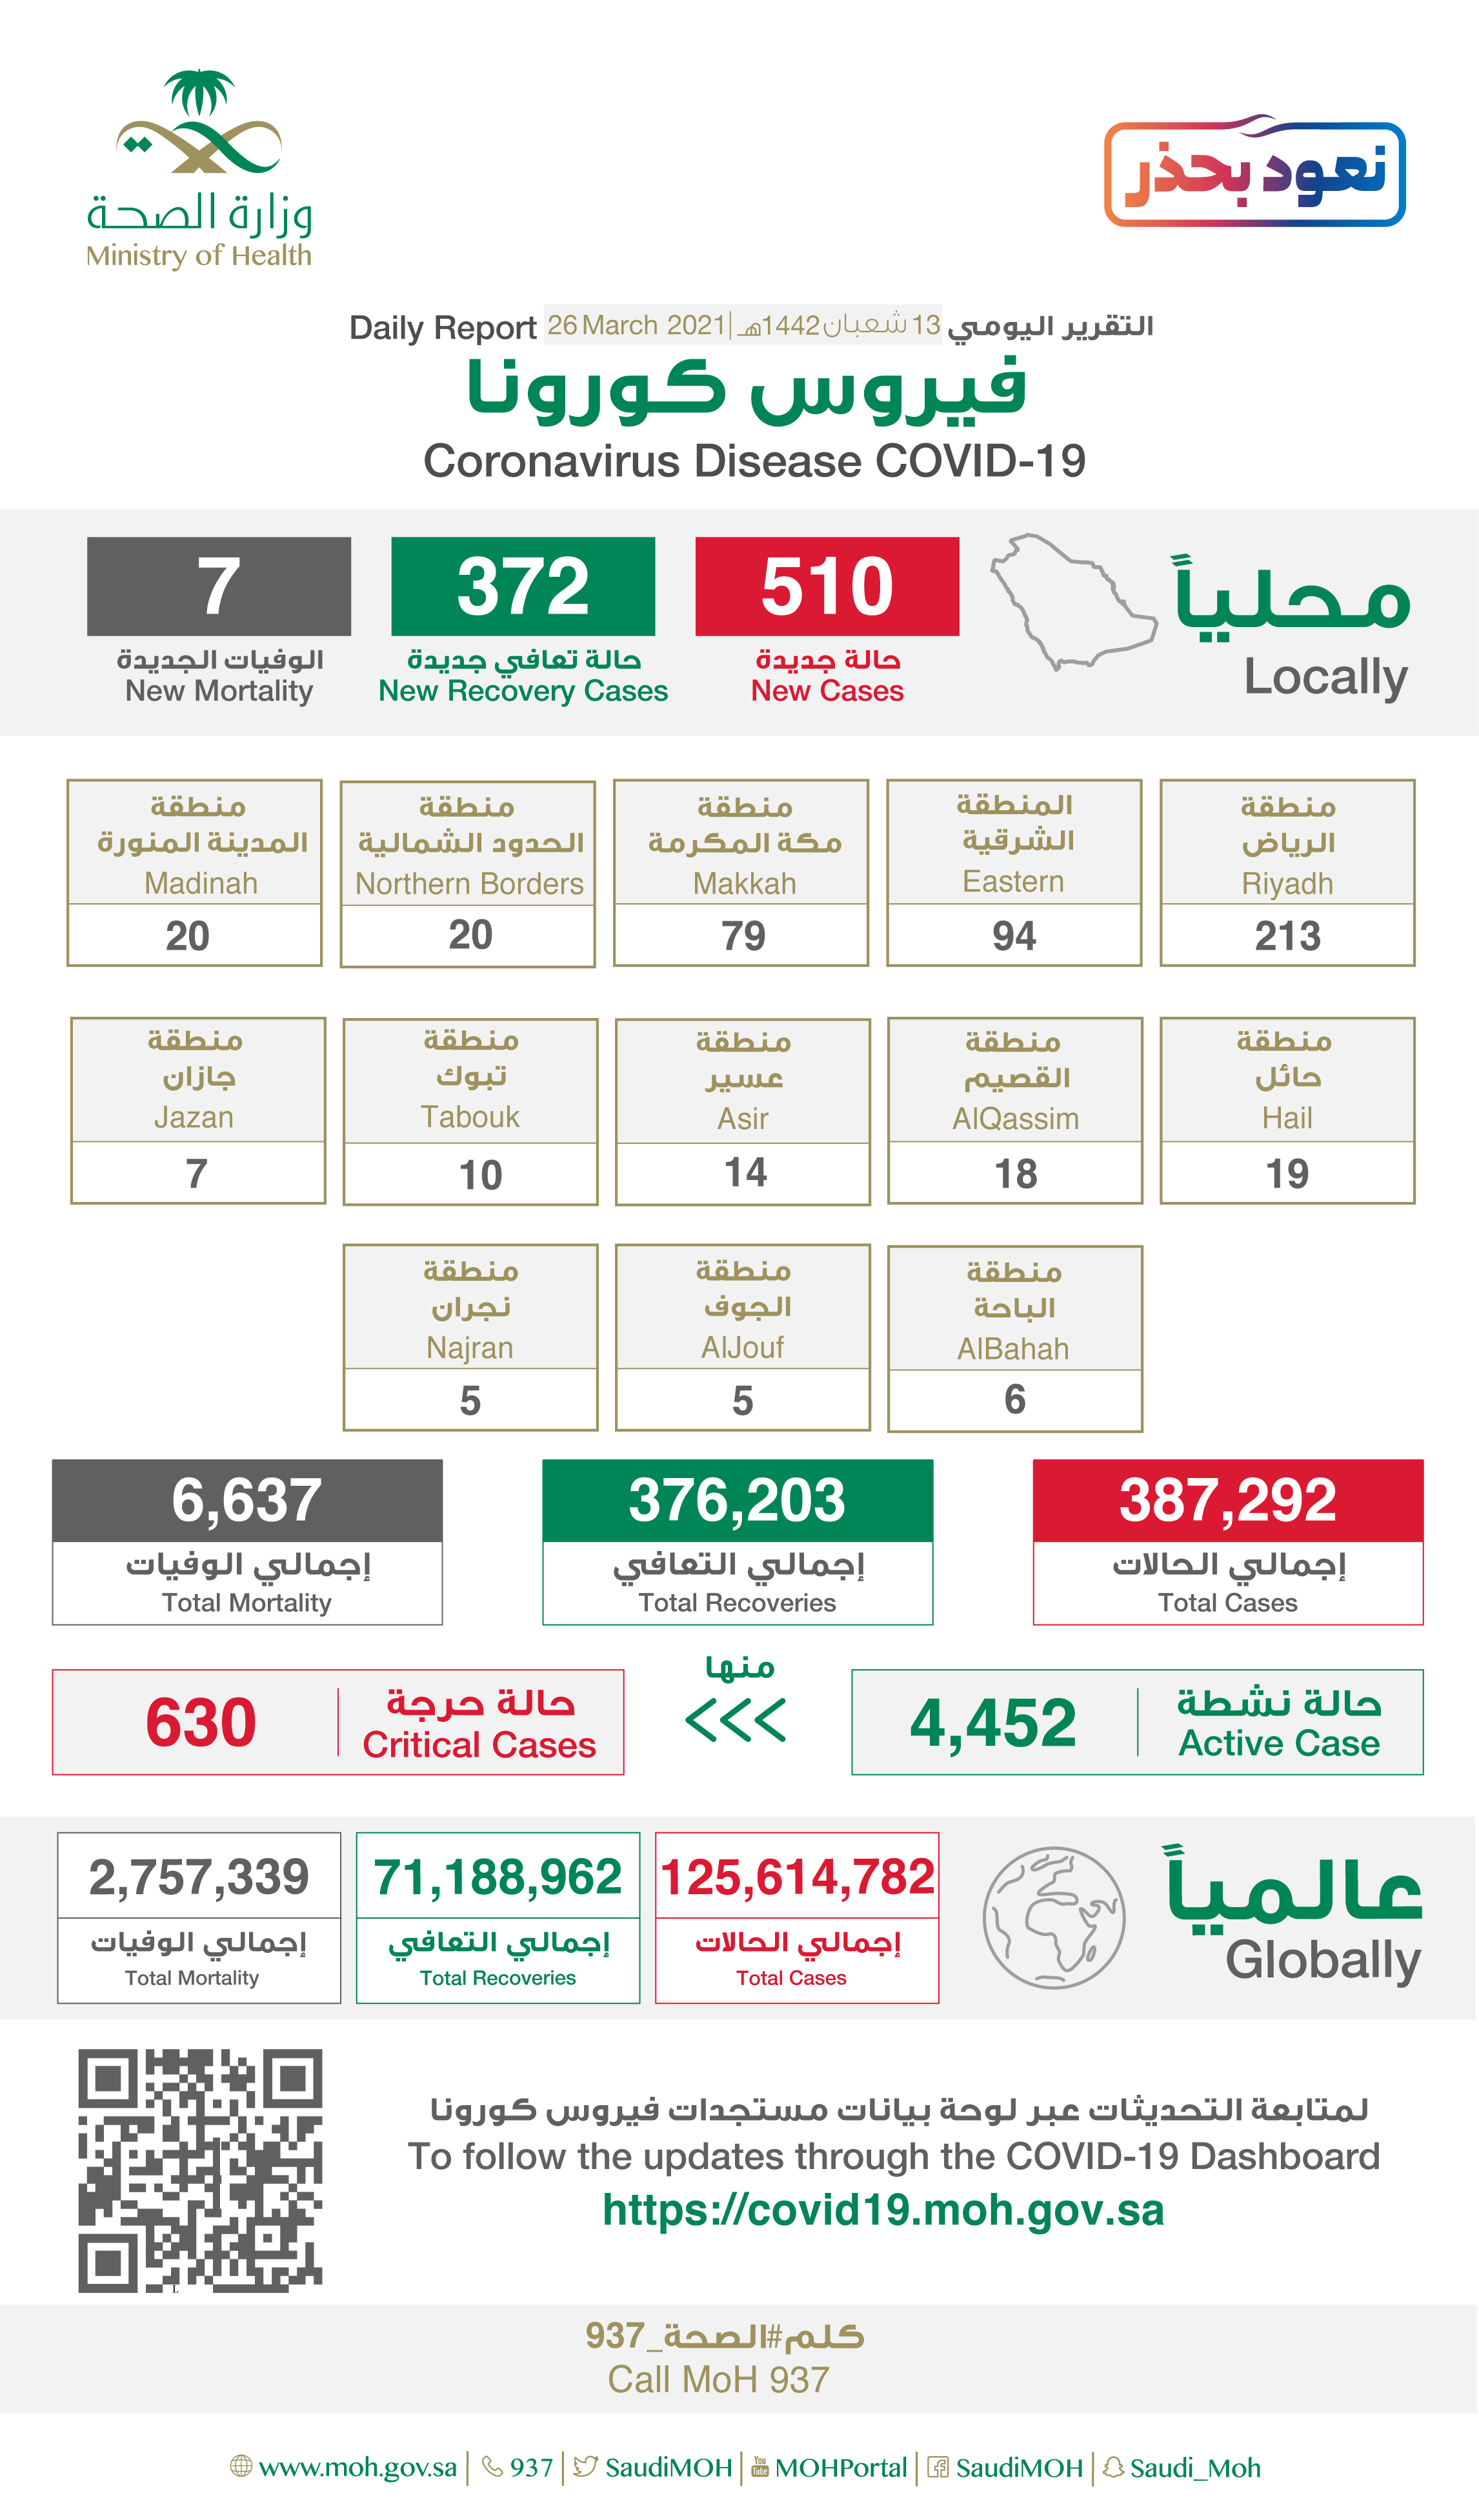 Saudi Arabia Coronavirus : Total Cases :387,292 , New Cases : 510, Cured : 376,203 , Deaths: 6,637, Active Cases : 4,452